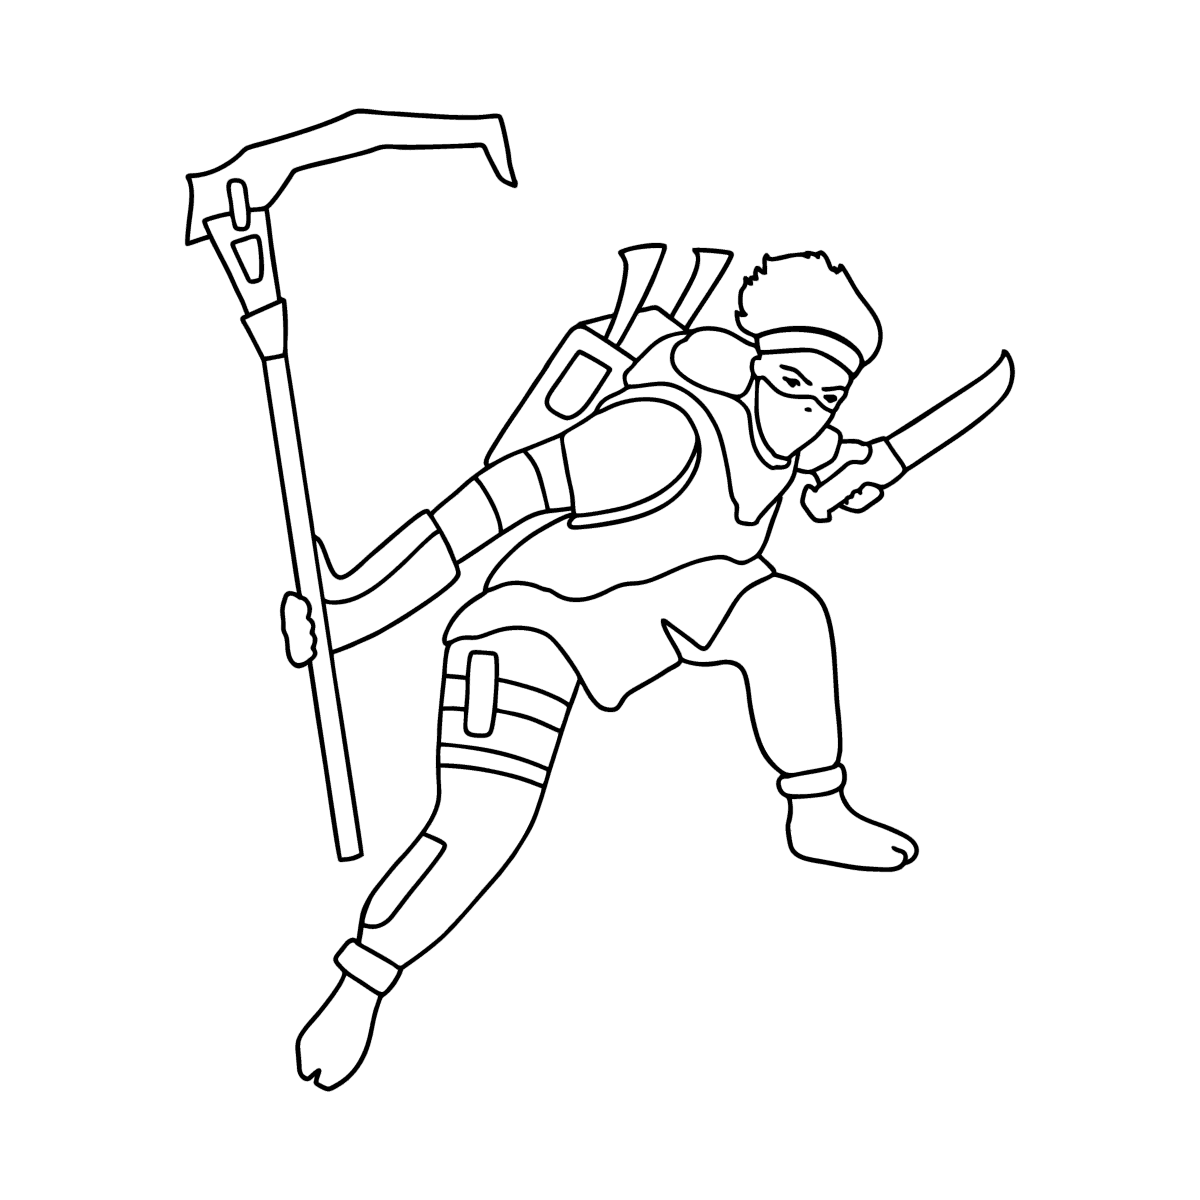 Desenho de Ninja de Fortnite para colorir